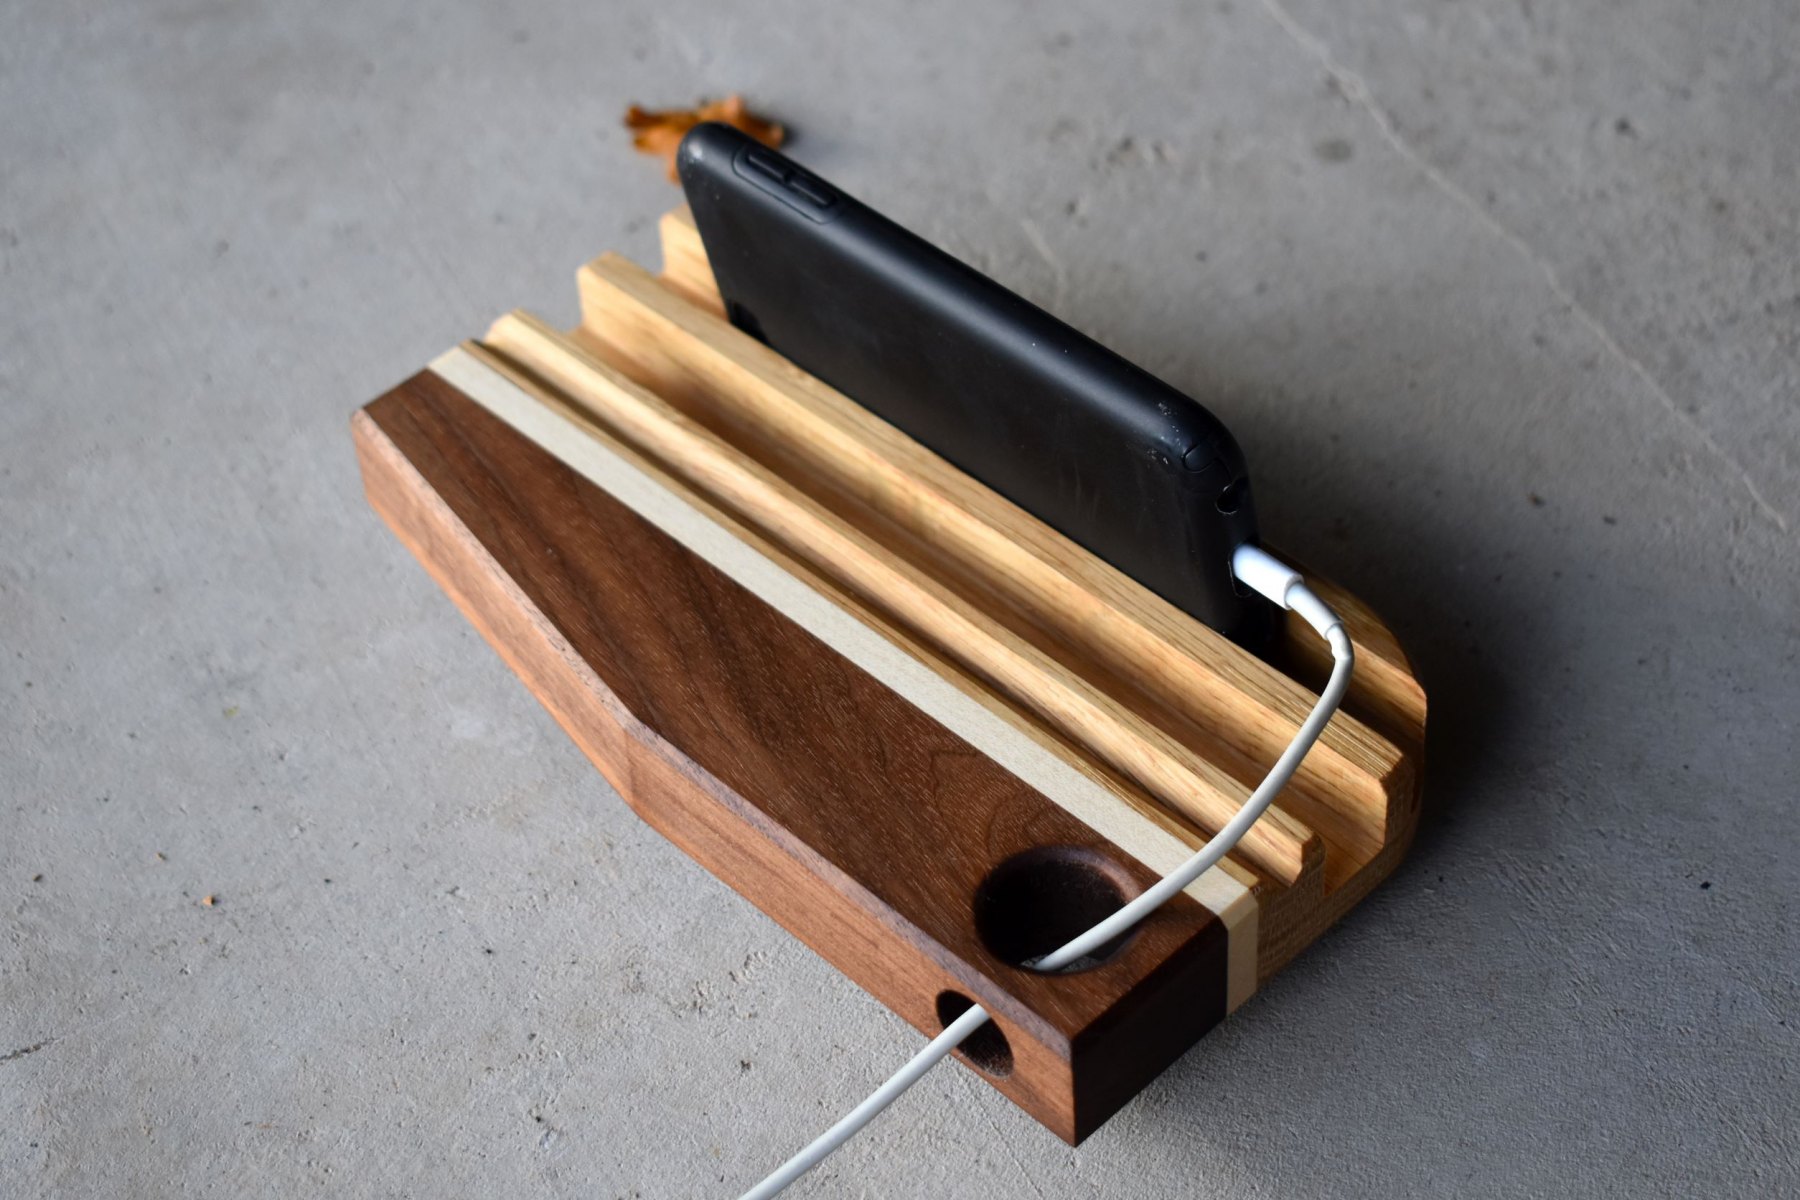 Device holder: oak, black walnut & a sycamore strip